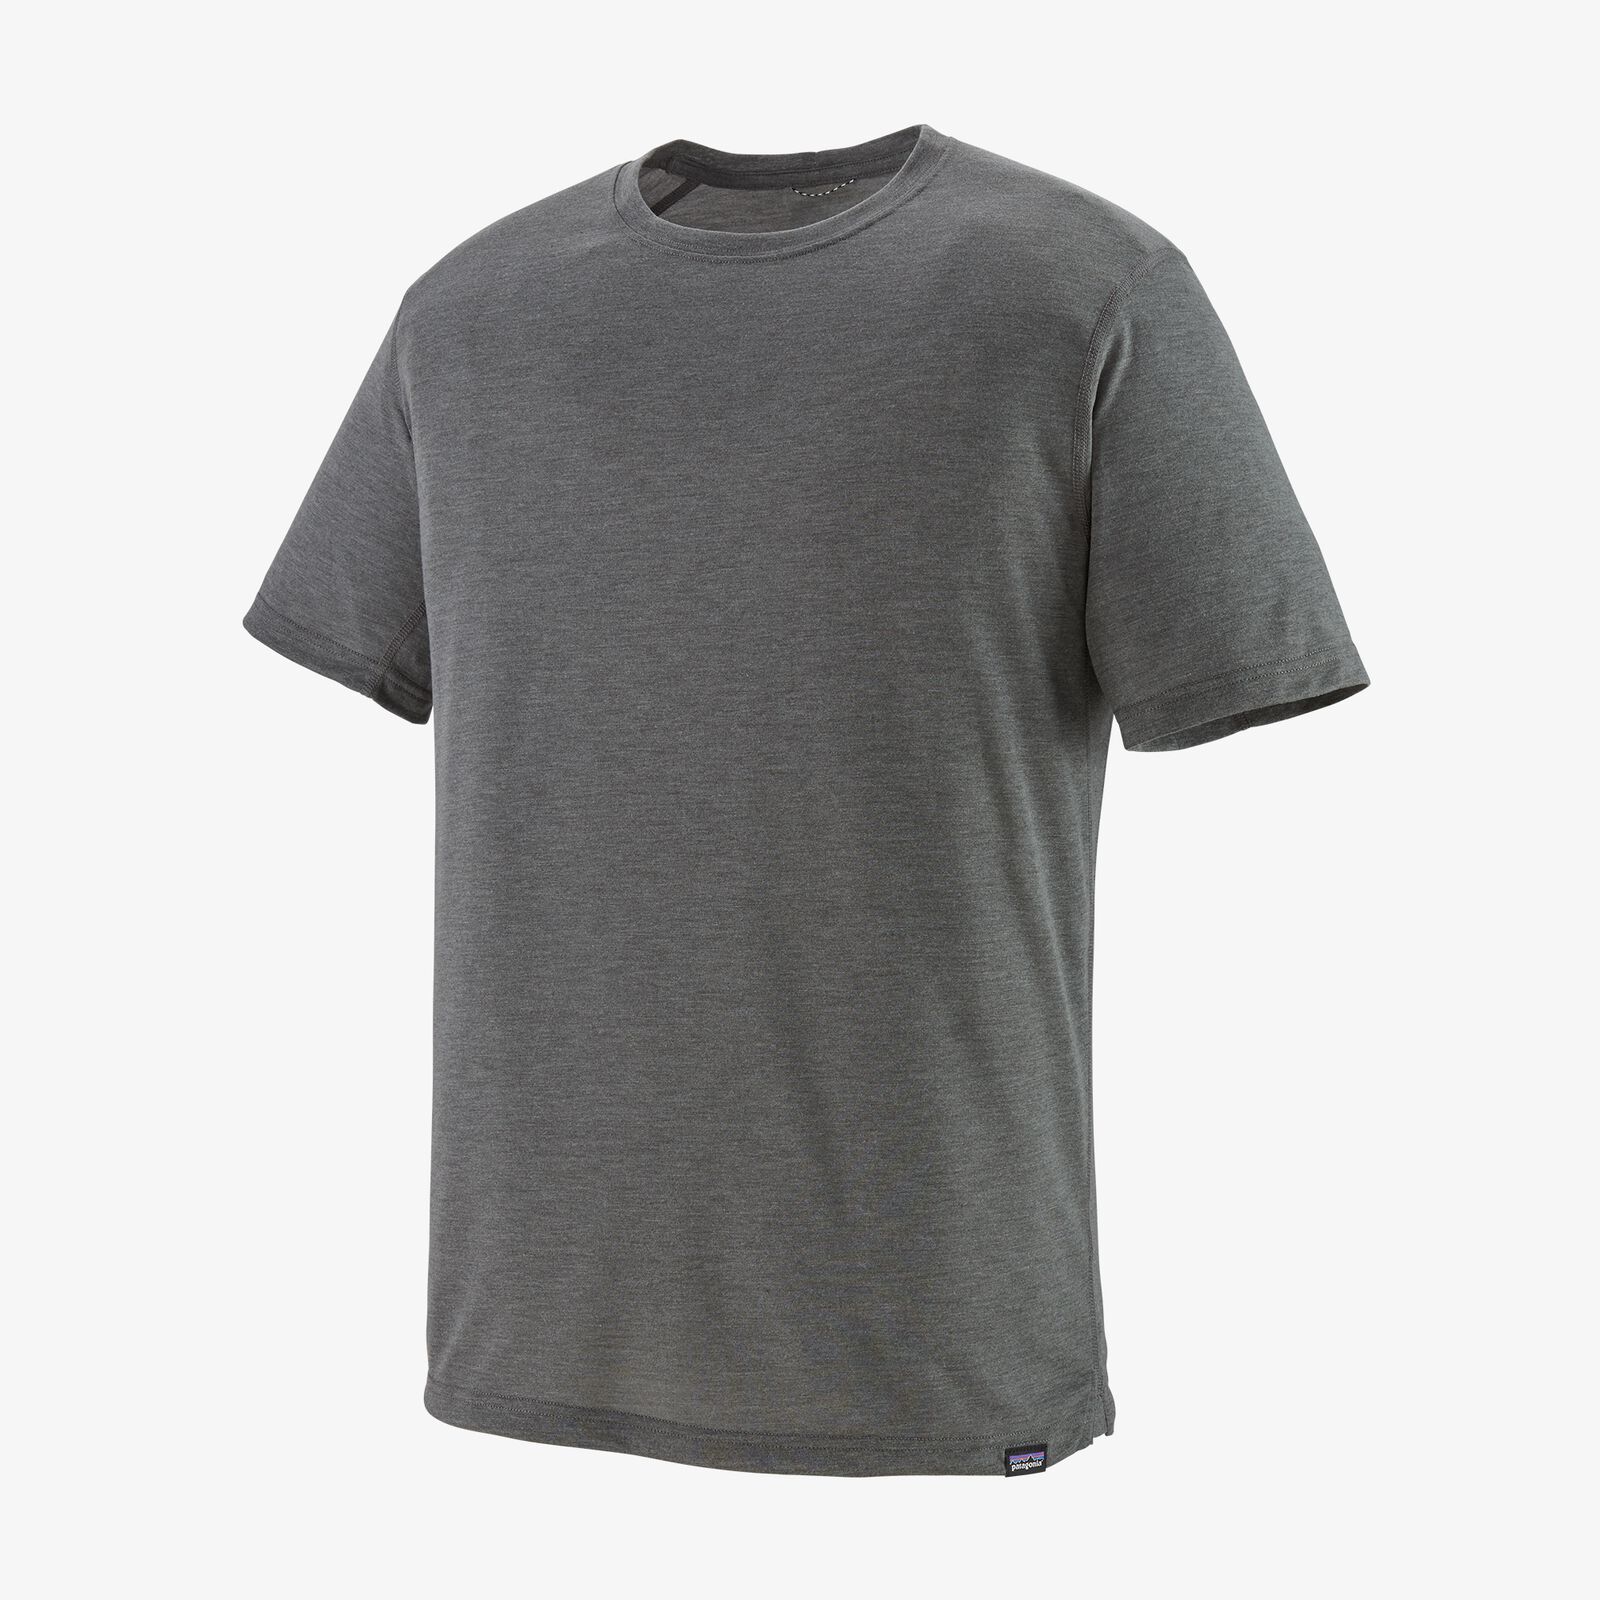 Patagonia Men's Capilene® Cool Trail Shirt - Forge Grey